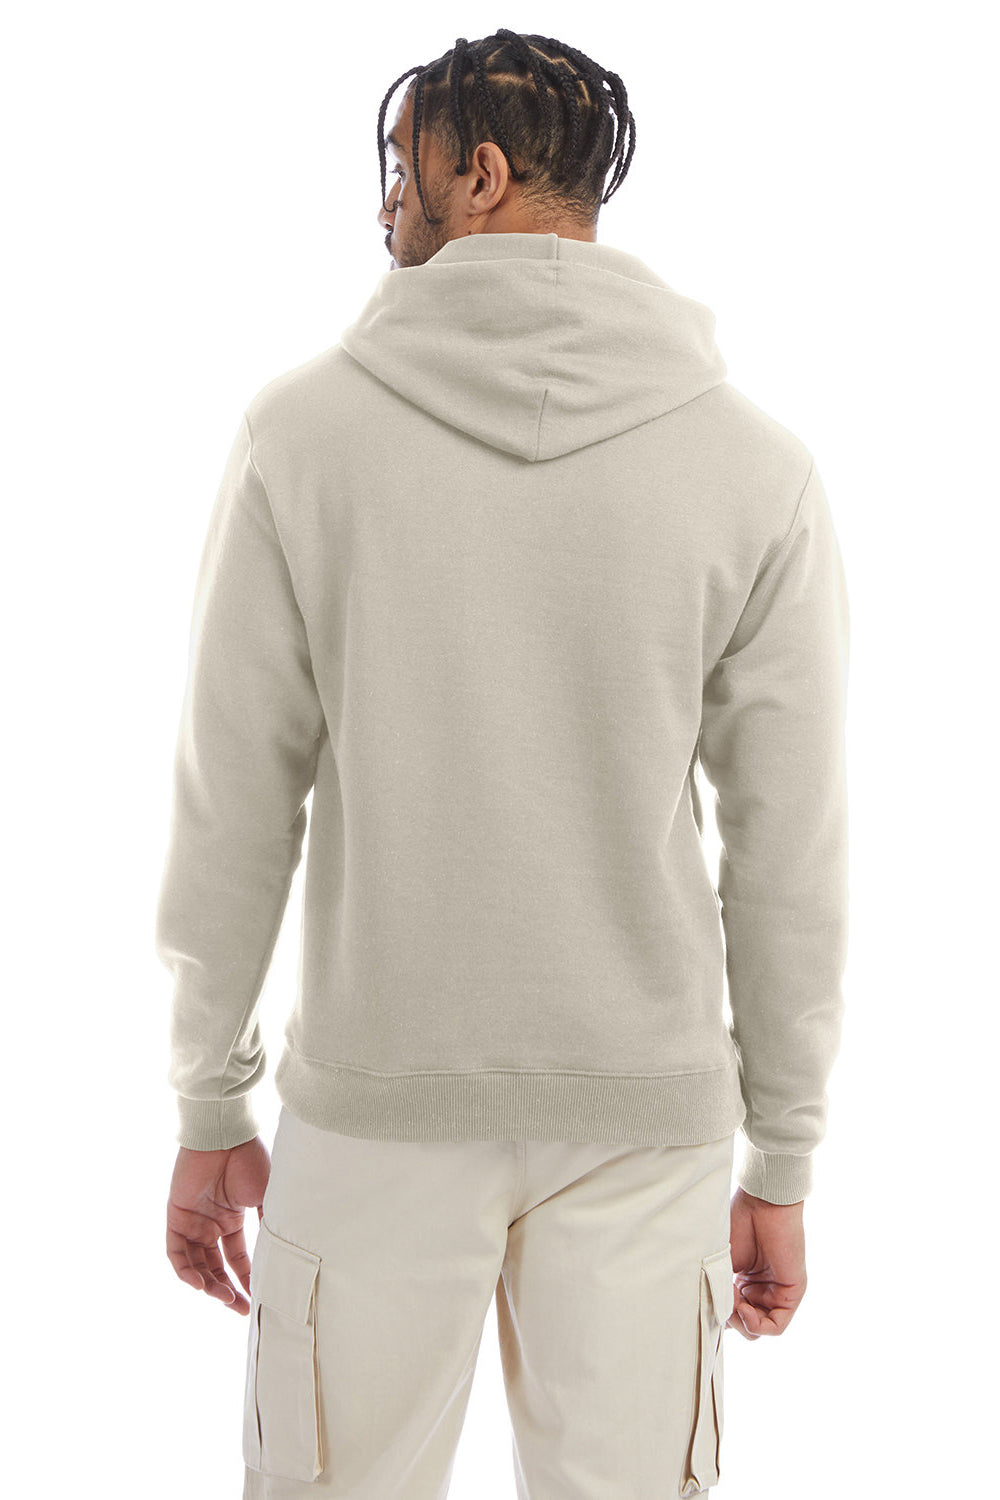 Champion S700 Mens Double Dry Eco Moisture Wicking Fleece Hooded Sweatshirt Hoodie Sand Back